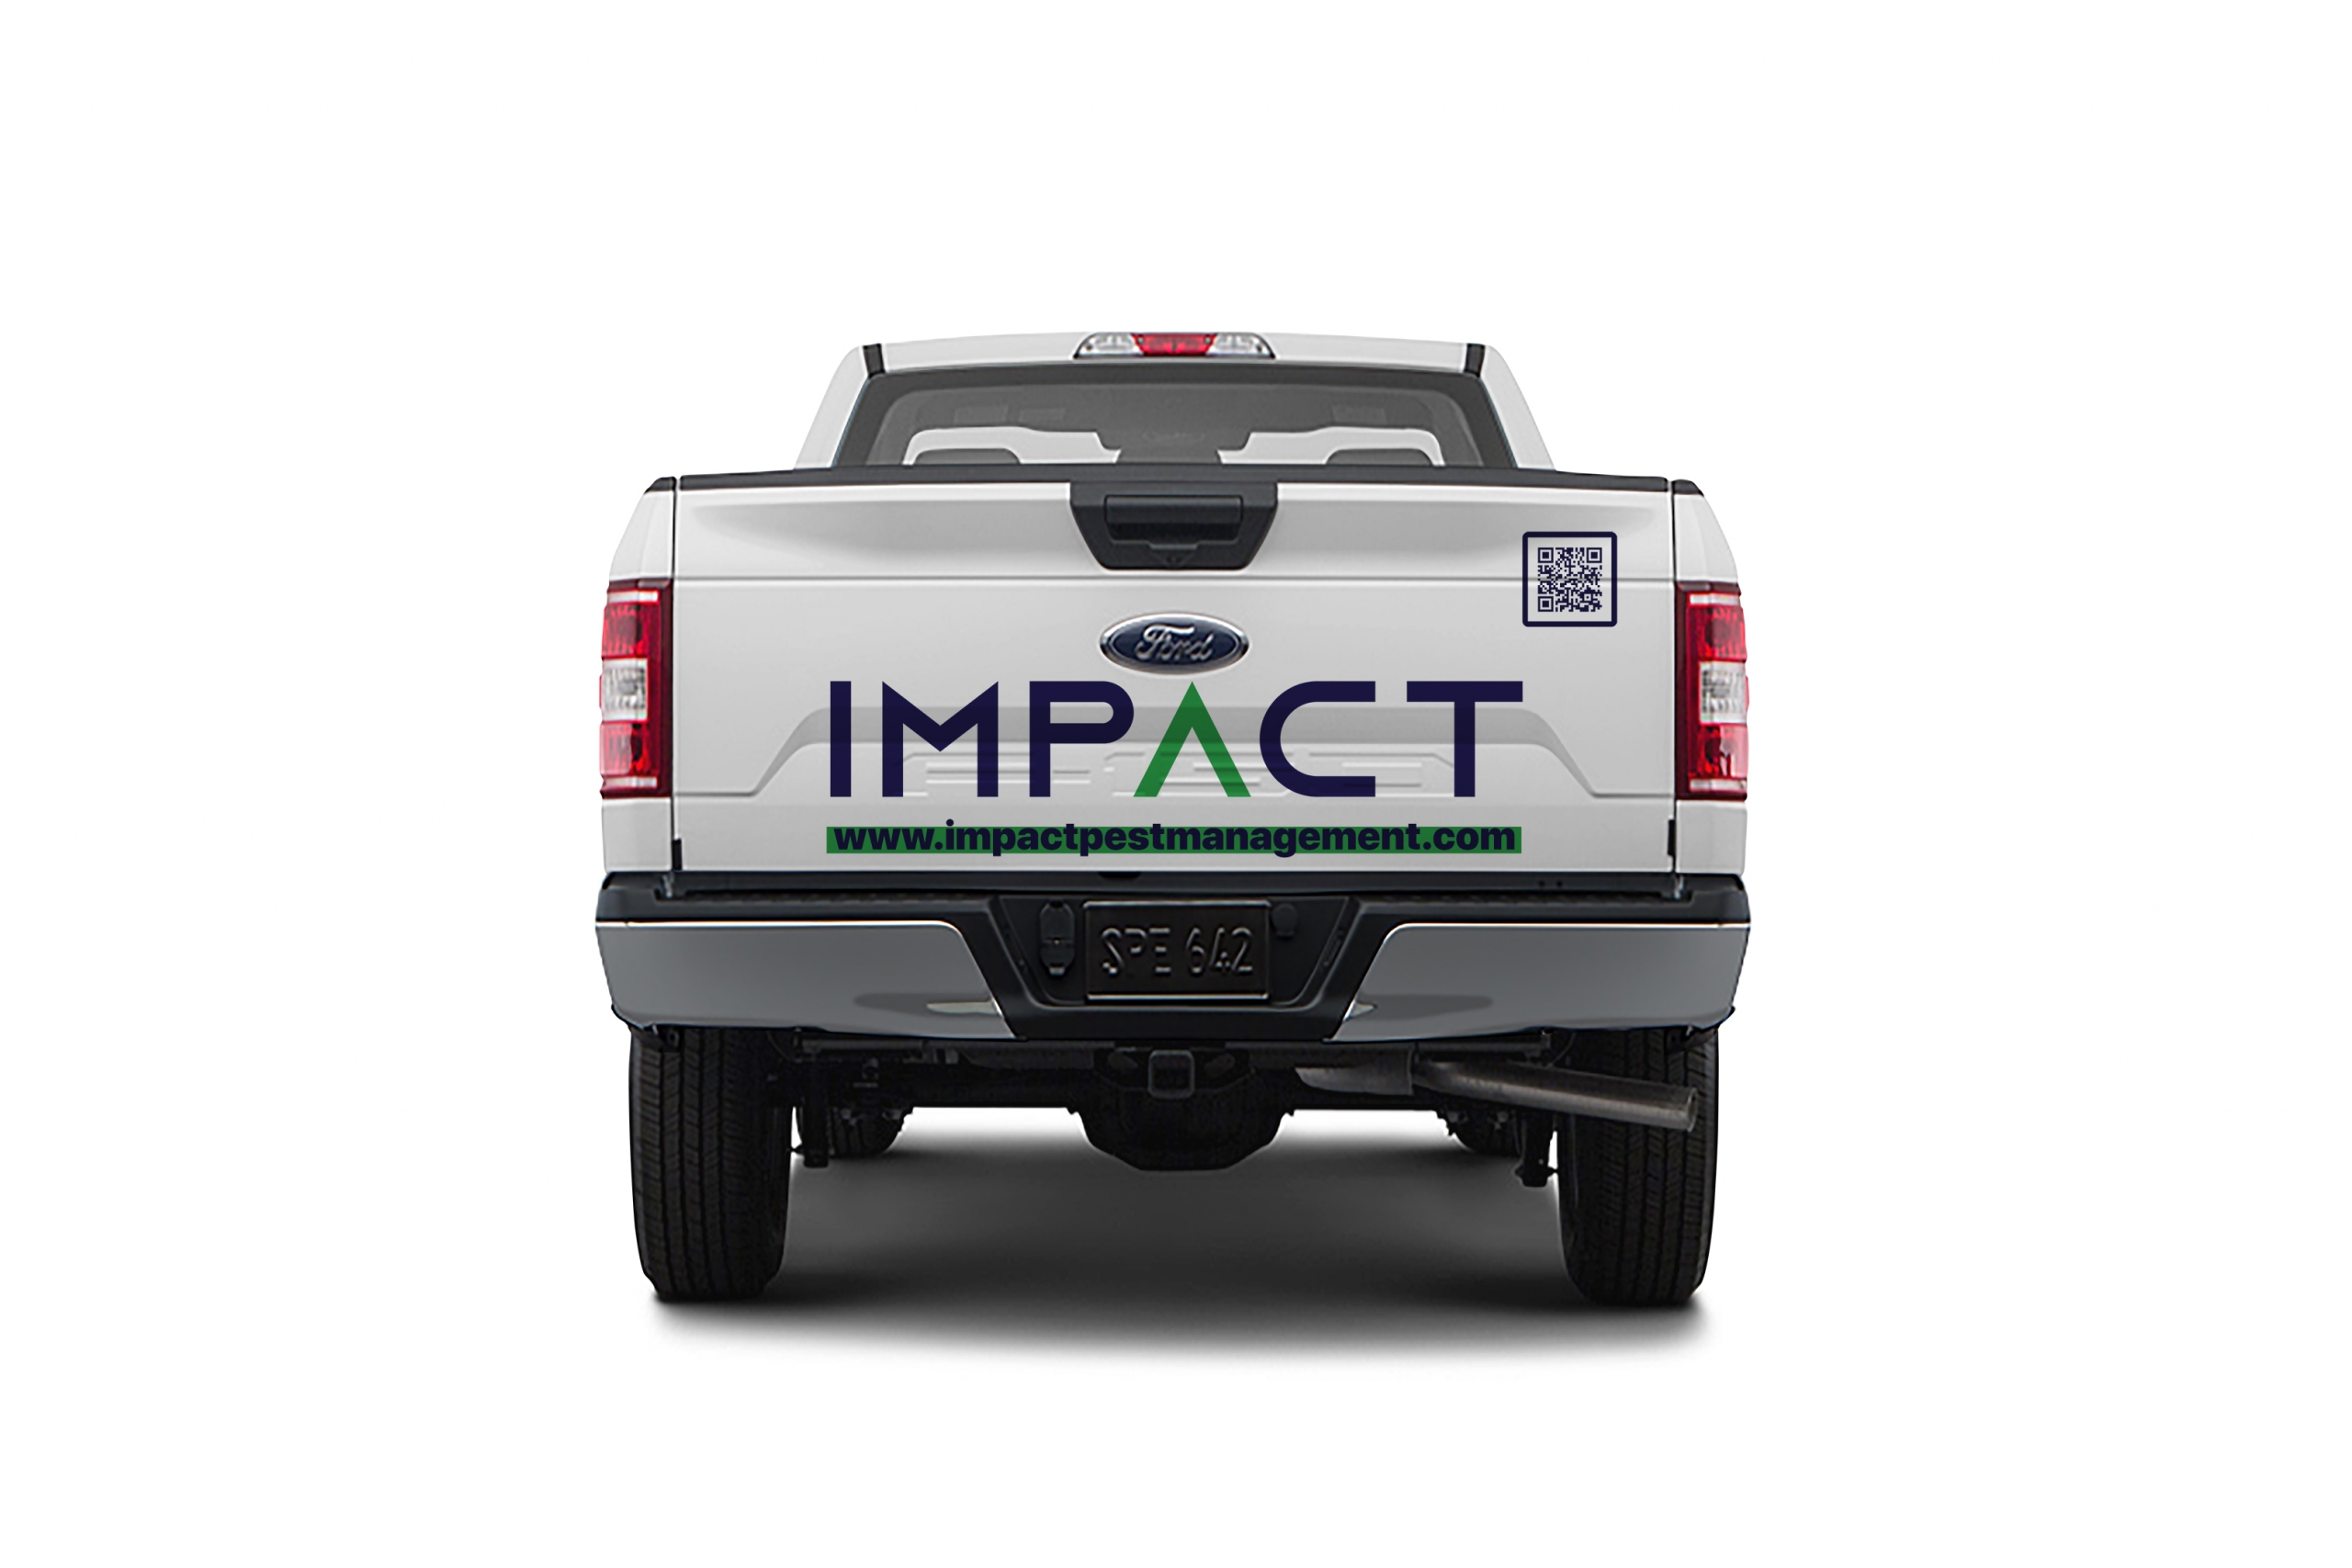 Impact Pest Management Ford F-150 Back